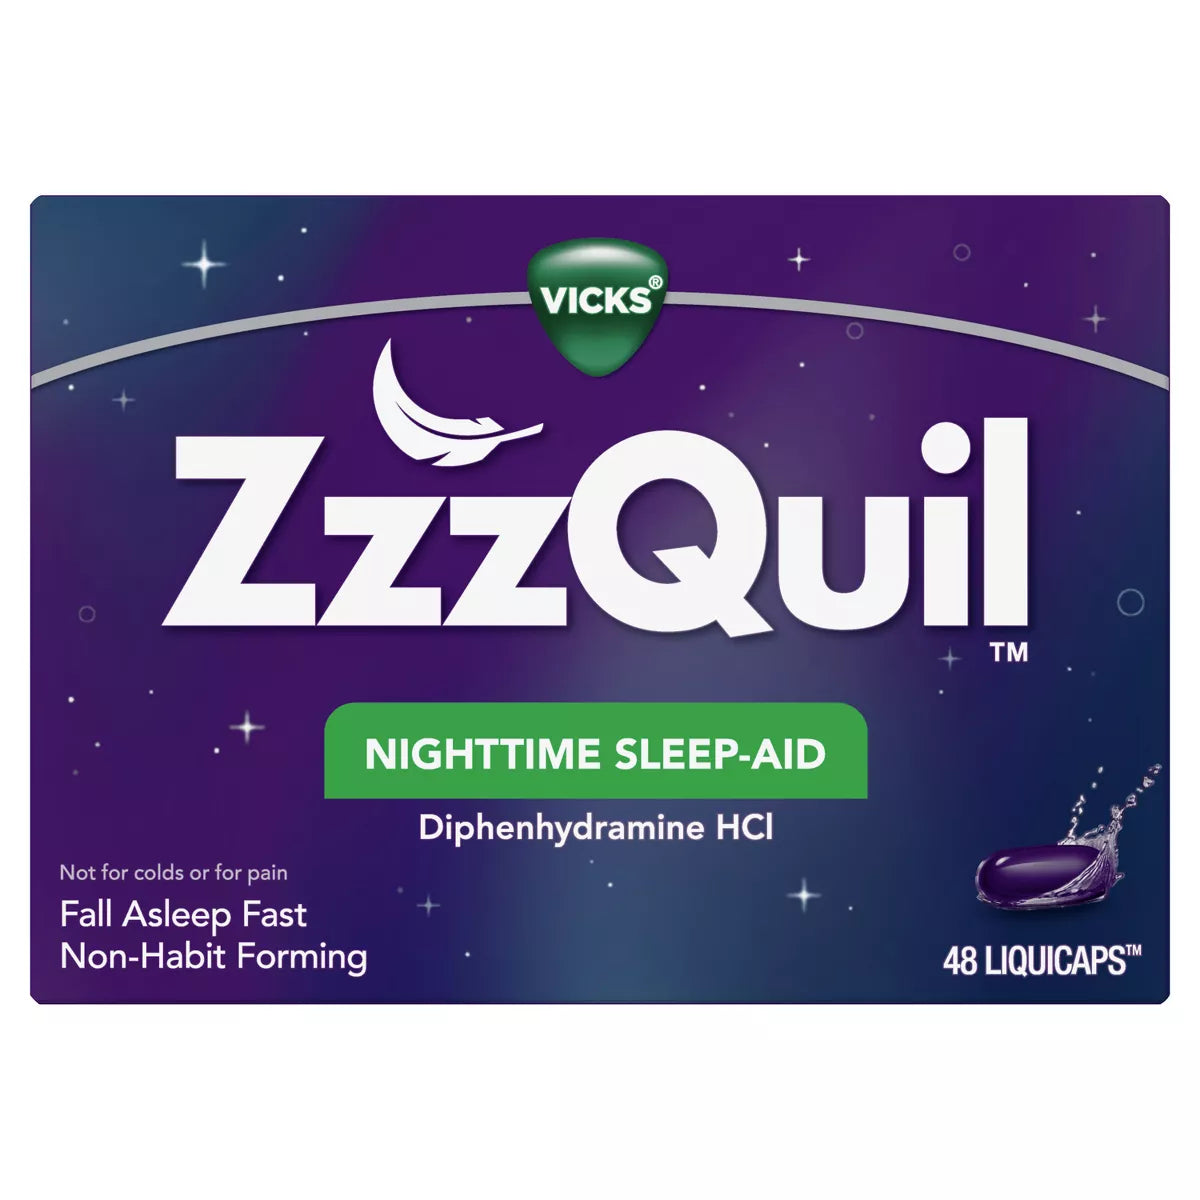 ZzzQuil Nighttime Sleep-Aid 48 Liquicaps